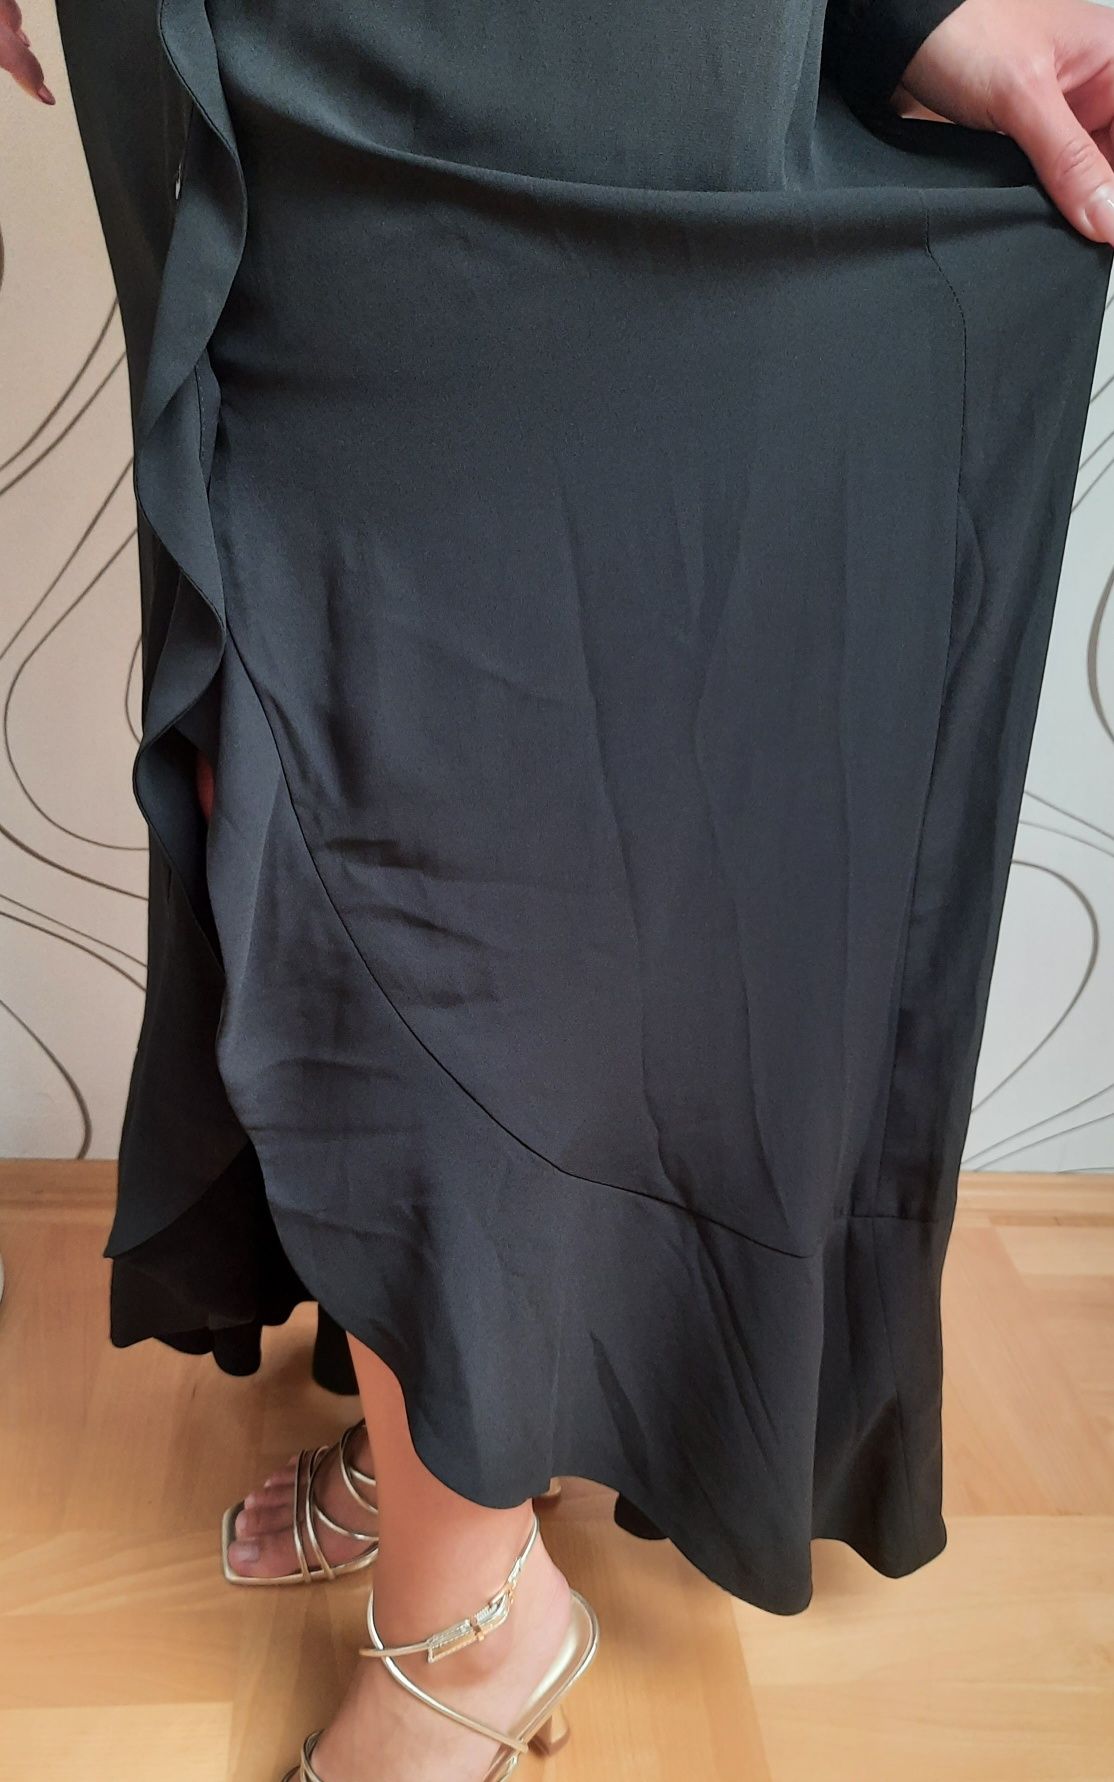 Damska sukienka Simple czarna maxi 34 Lidia Kalita